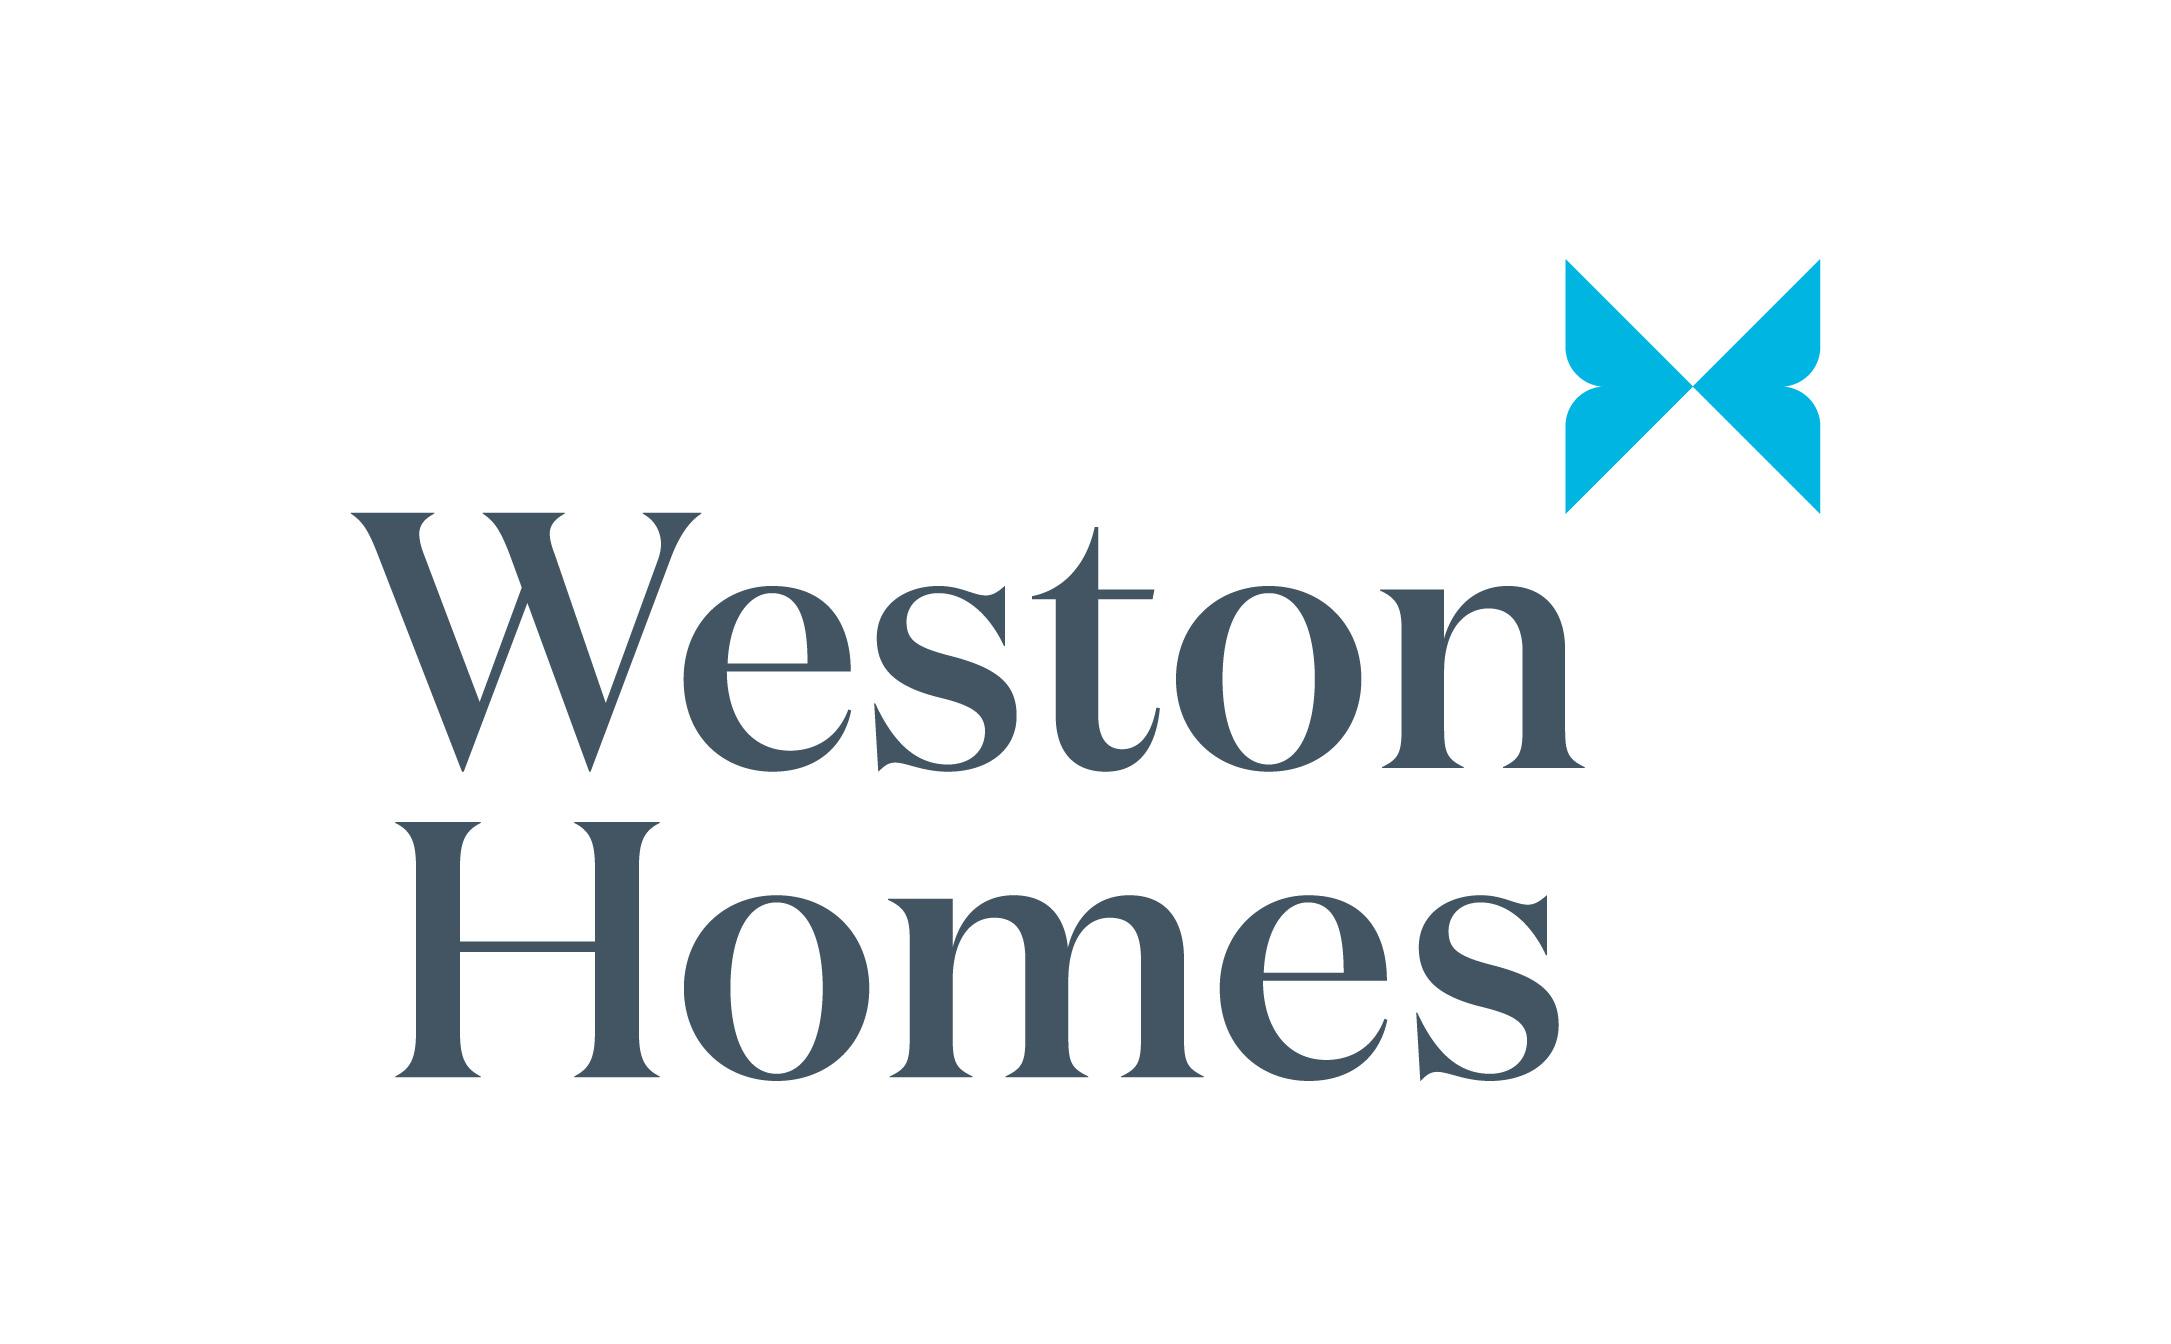 Weston Homes